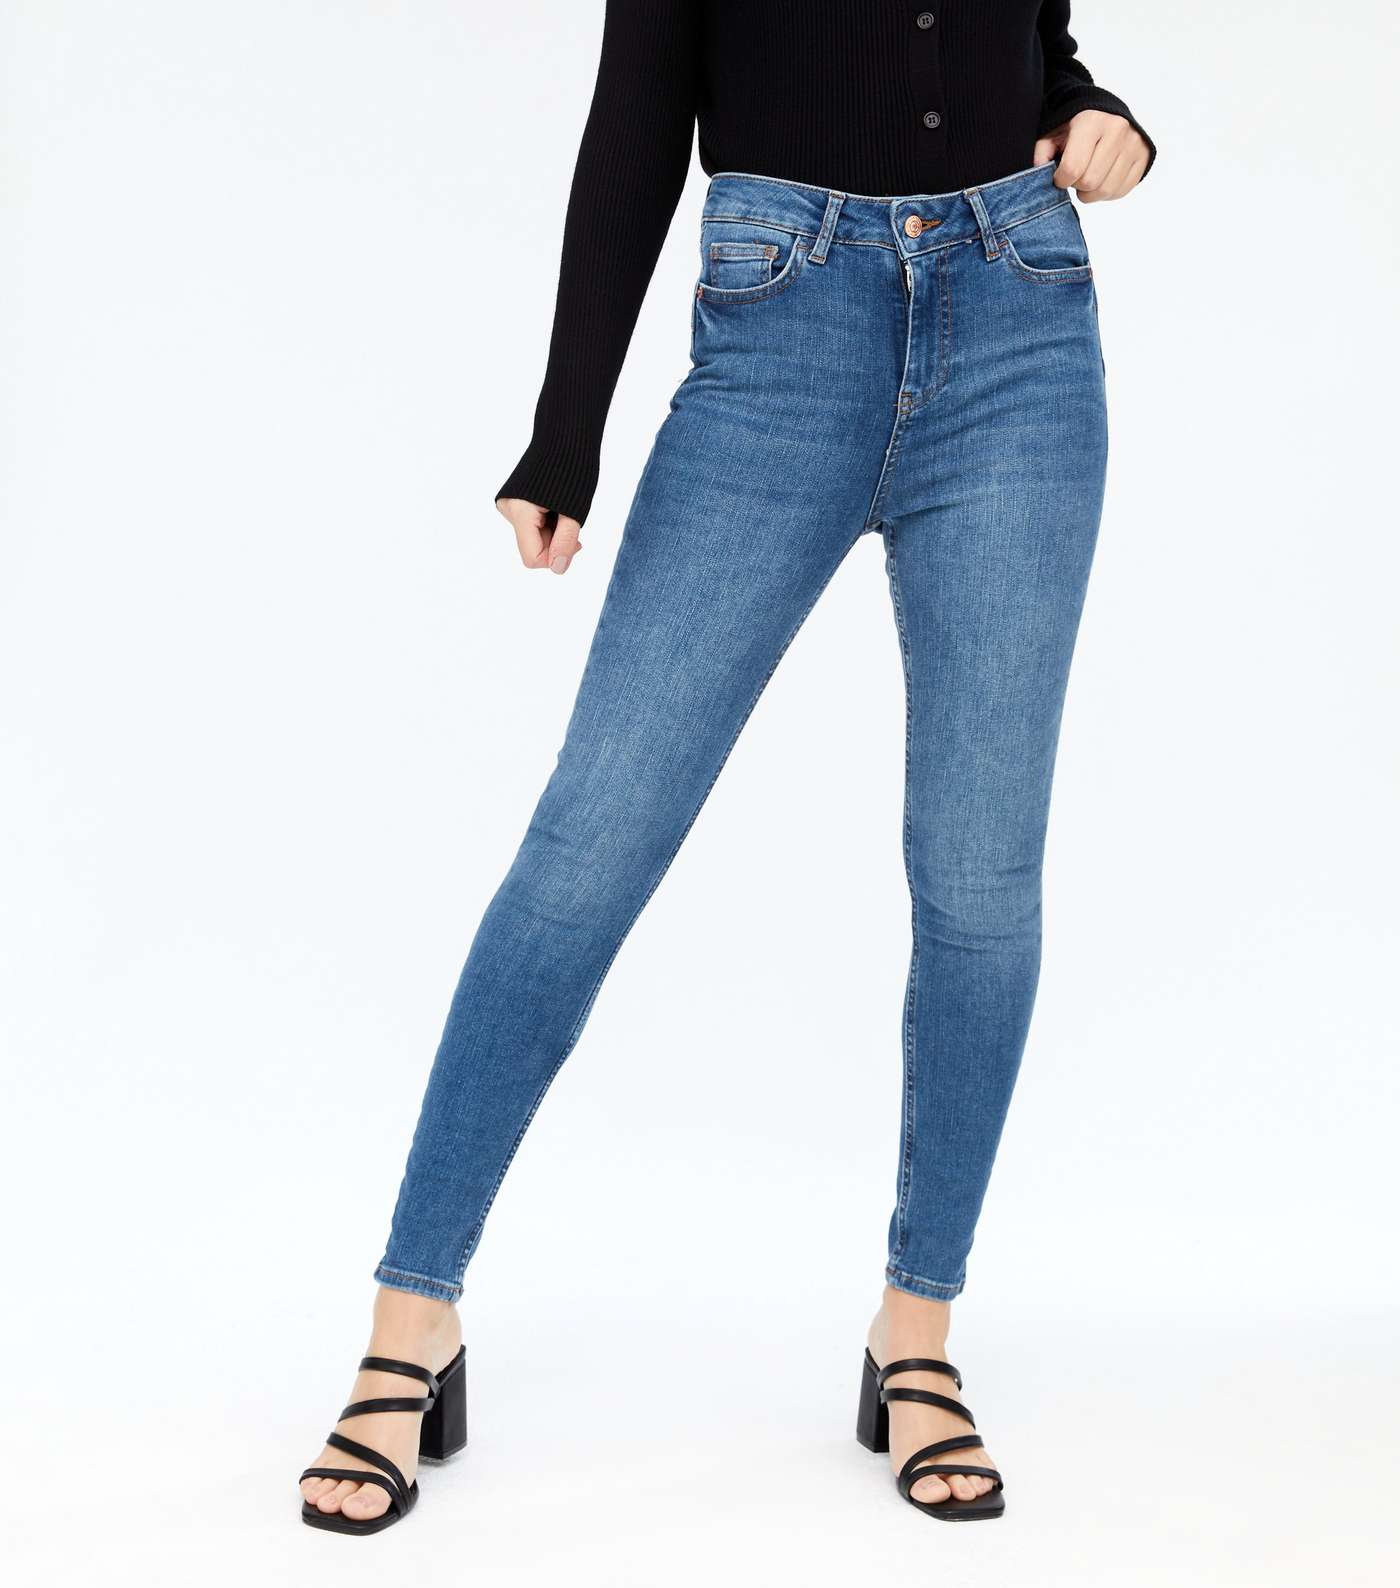 Petite Blue Mid Wash 'Lift & Shape' Jenna Skinny Jeans Image 2